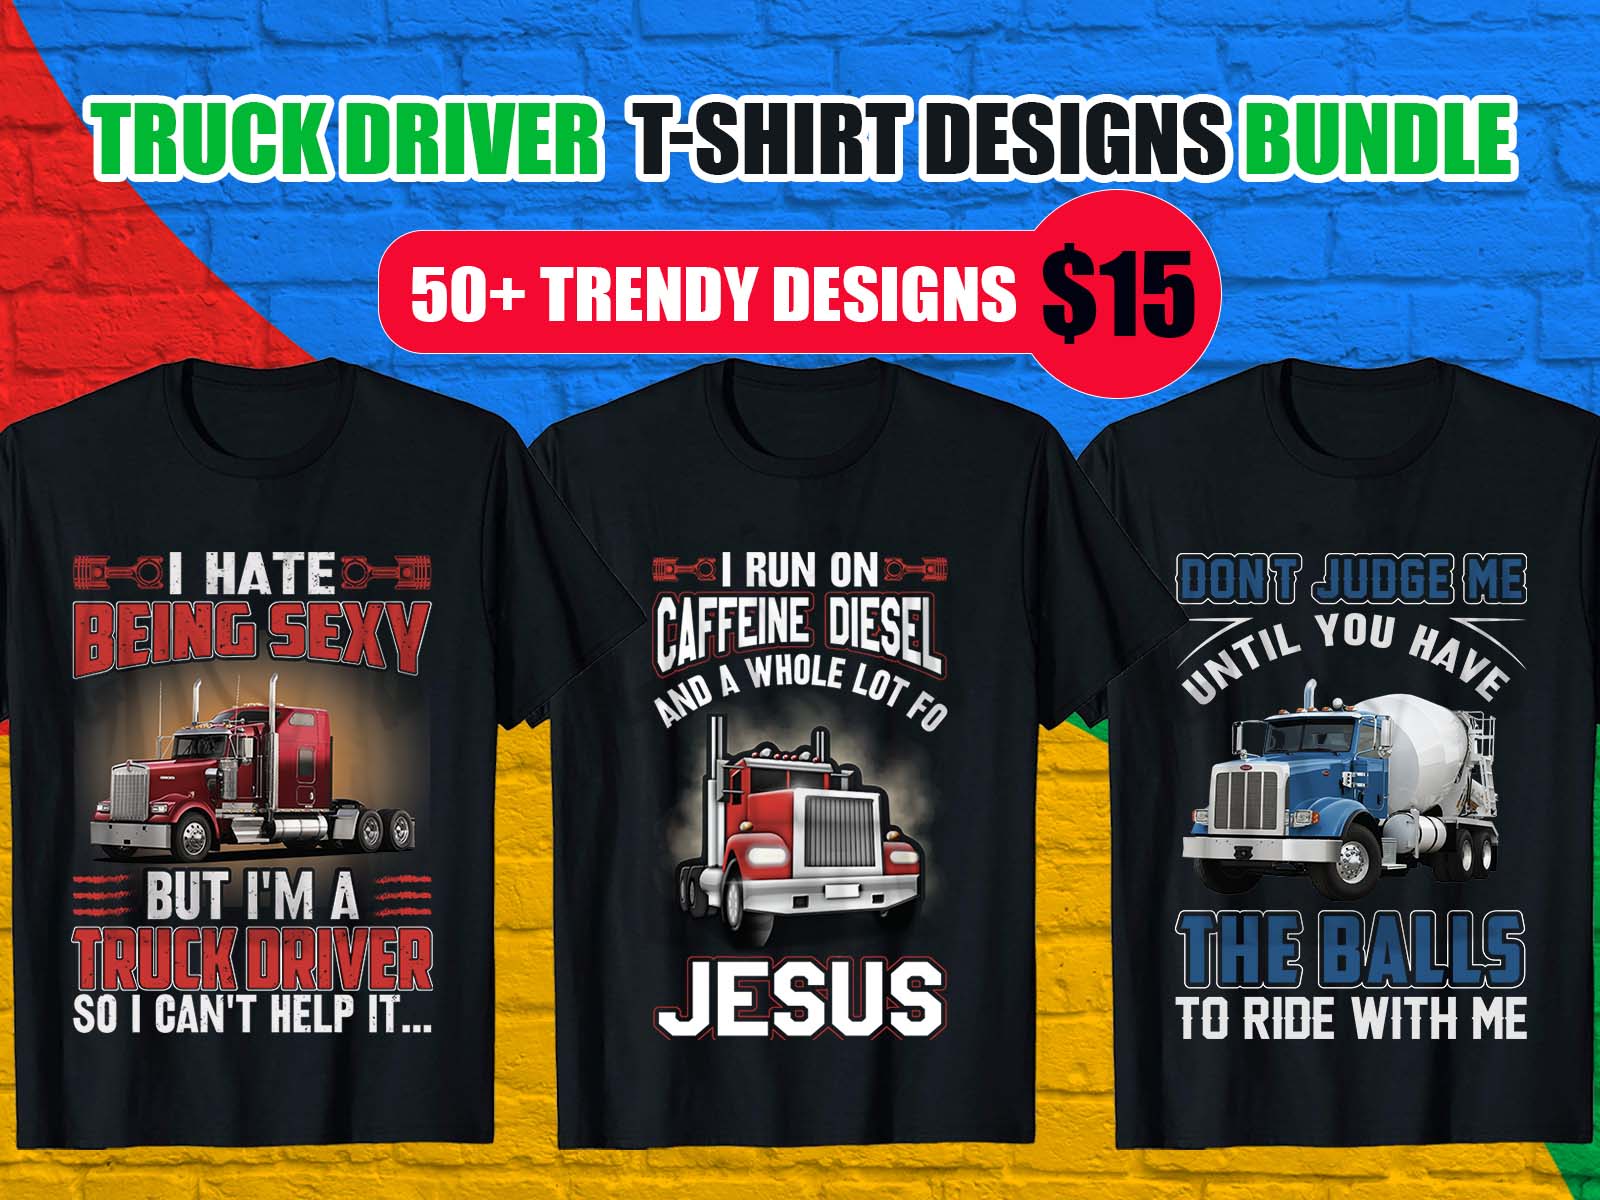 Truck Driver T-Shirt Design Bundle